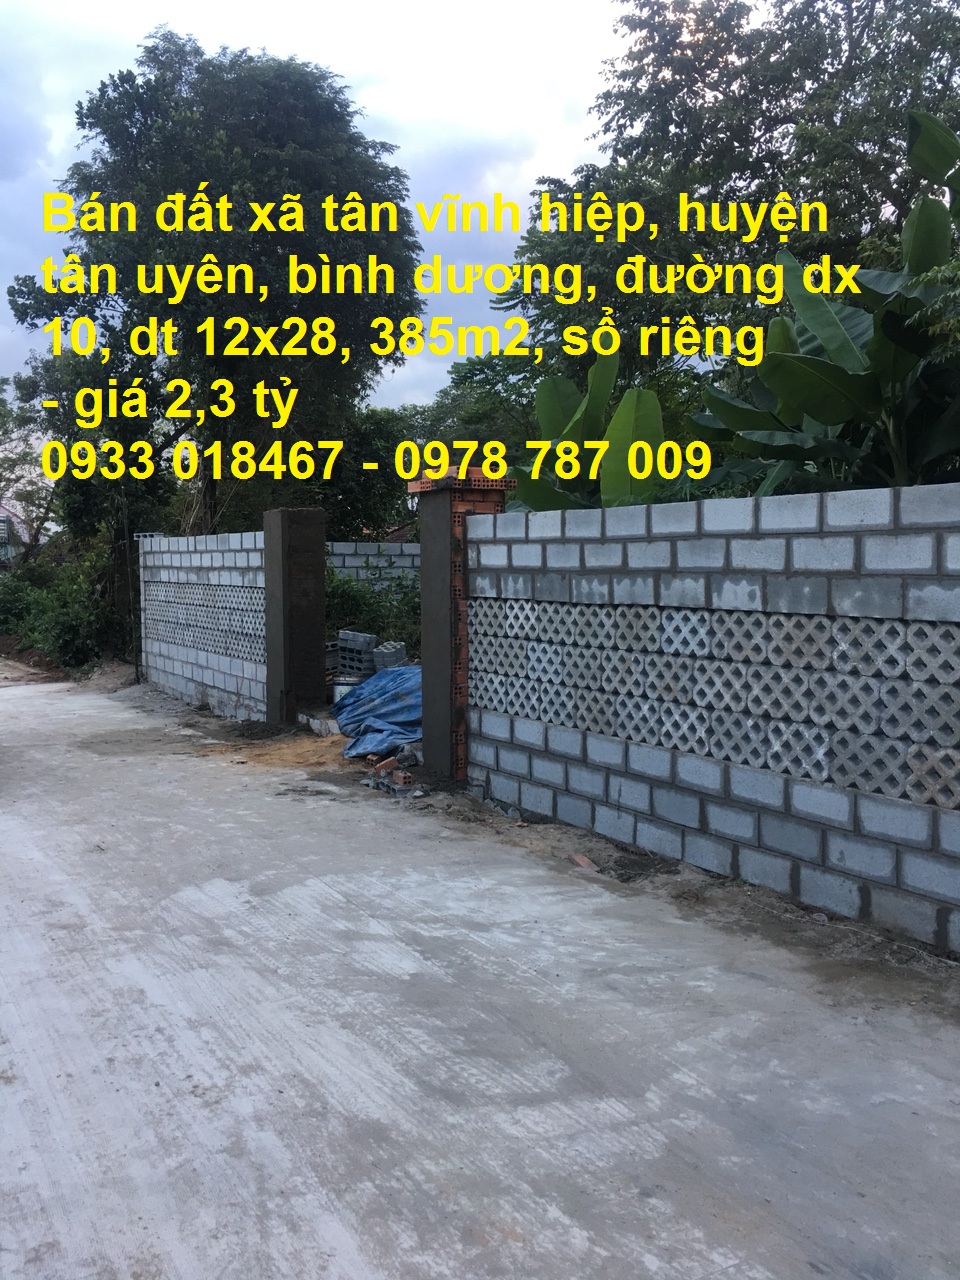 https://cdn.realtorvietnam.com/uploads/real_estate/ban-dat-xa-tan-vinh-hiep-huyen-tan-uyen-binh-duong-duong-dx-10-dt-12x28-385m2-0933-0184671_1520512079.jpg